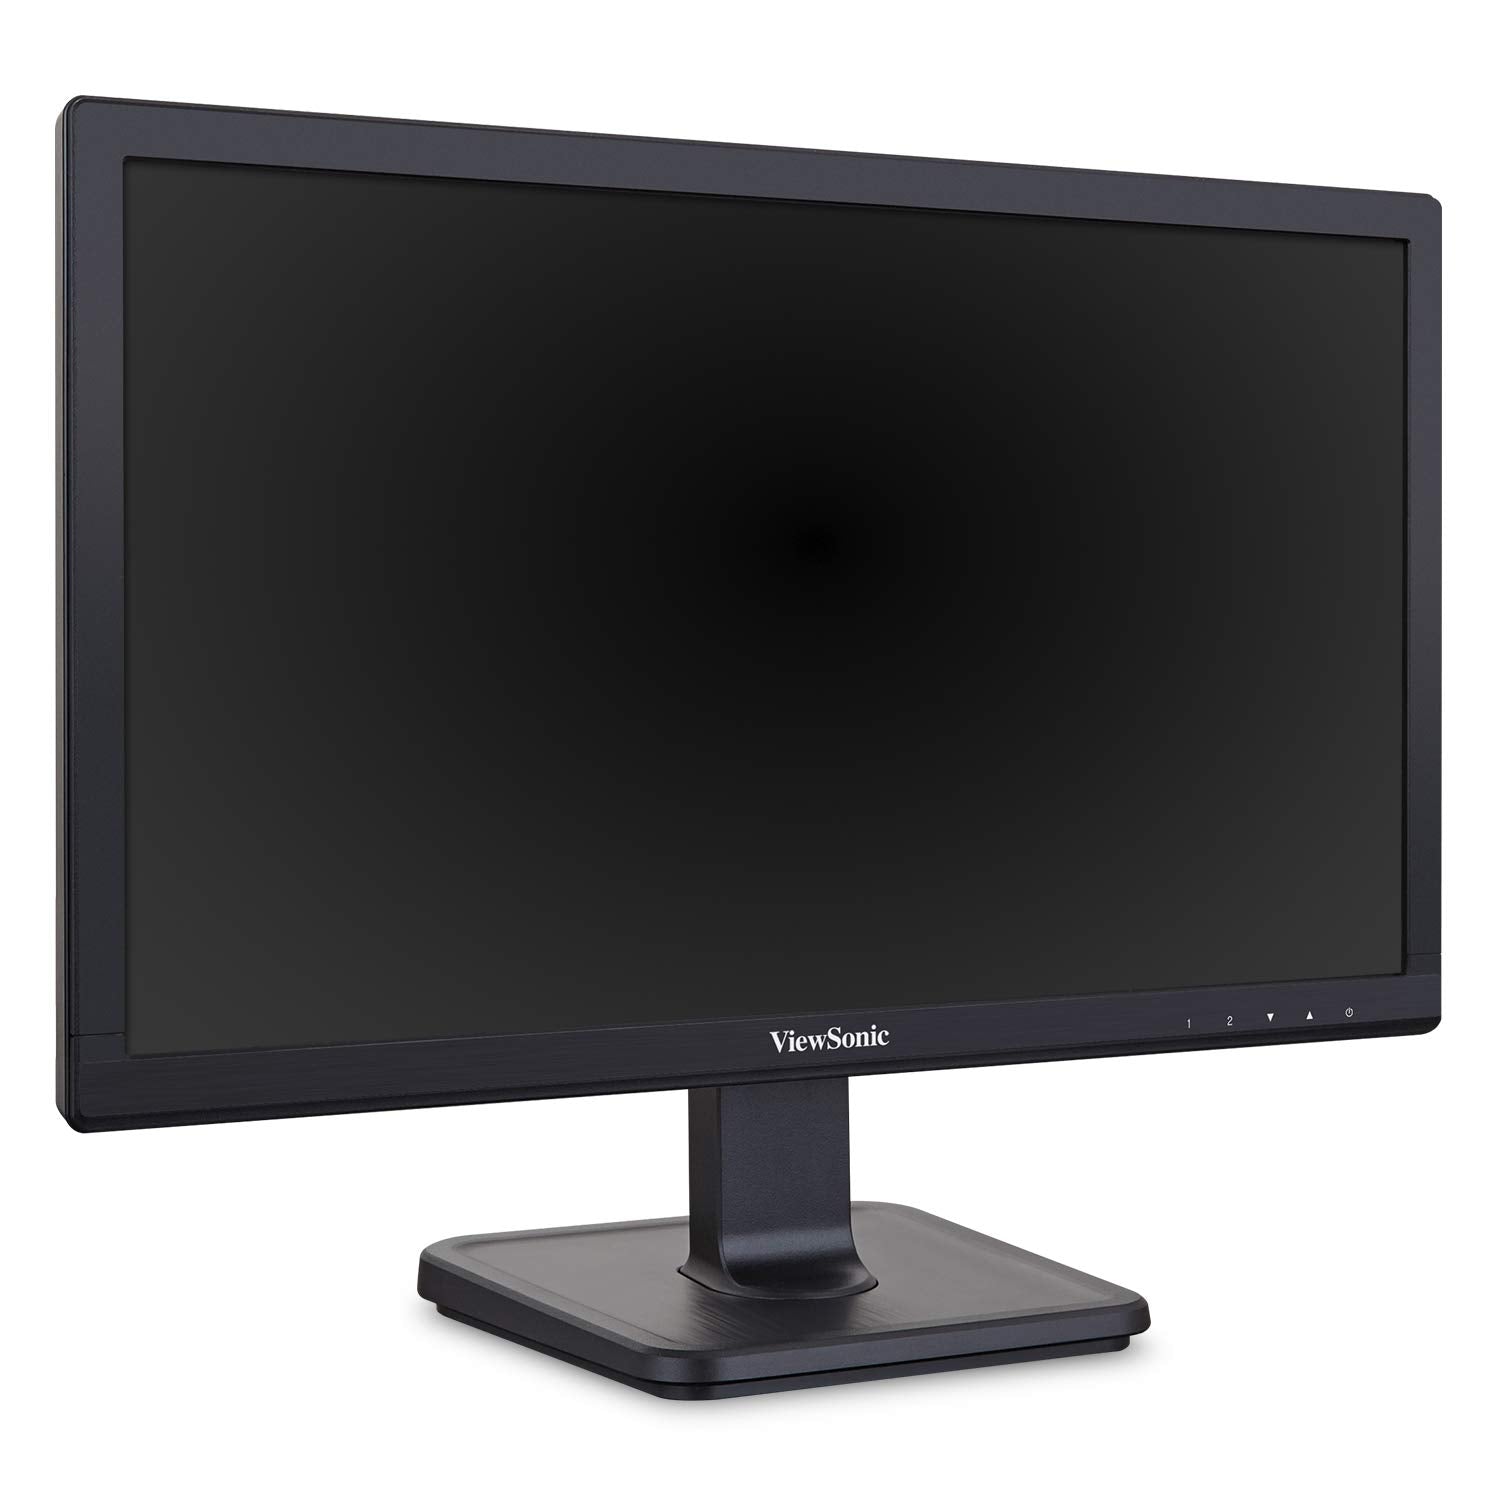 ViewSonic VA1901-A-R 19" Widescreen LCD Monitor  - C Grade Refurbished